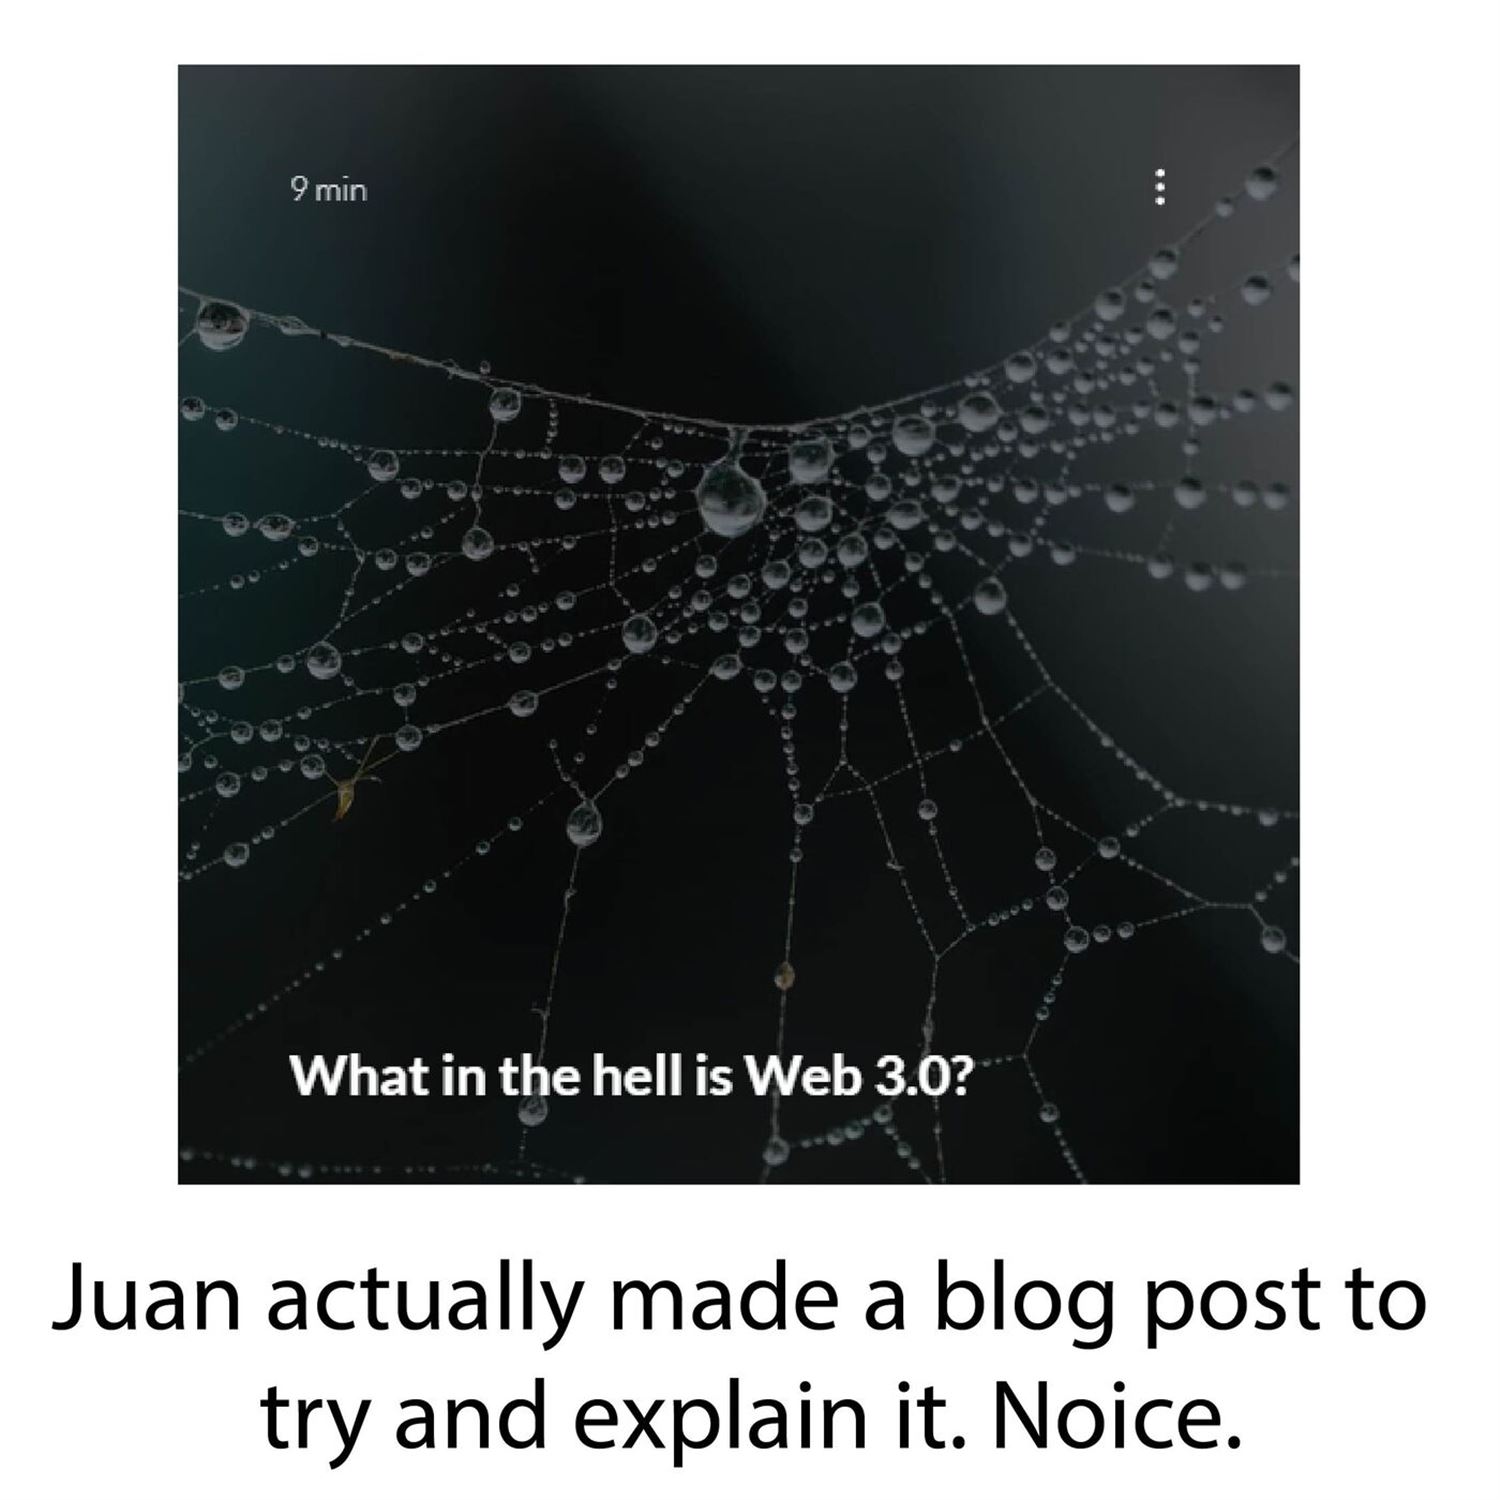 Juan's blog post & subjectivity